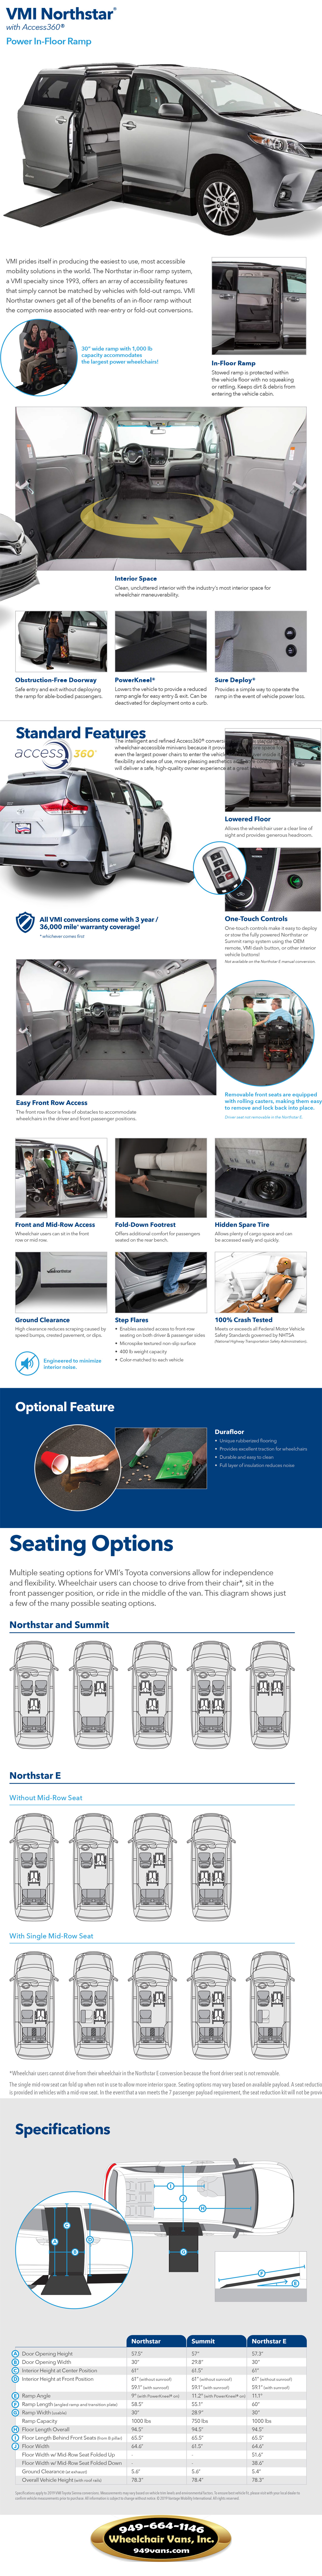 Toyota Sienna VMI Northstar Power Infloor Wheelchair Van Conversion